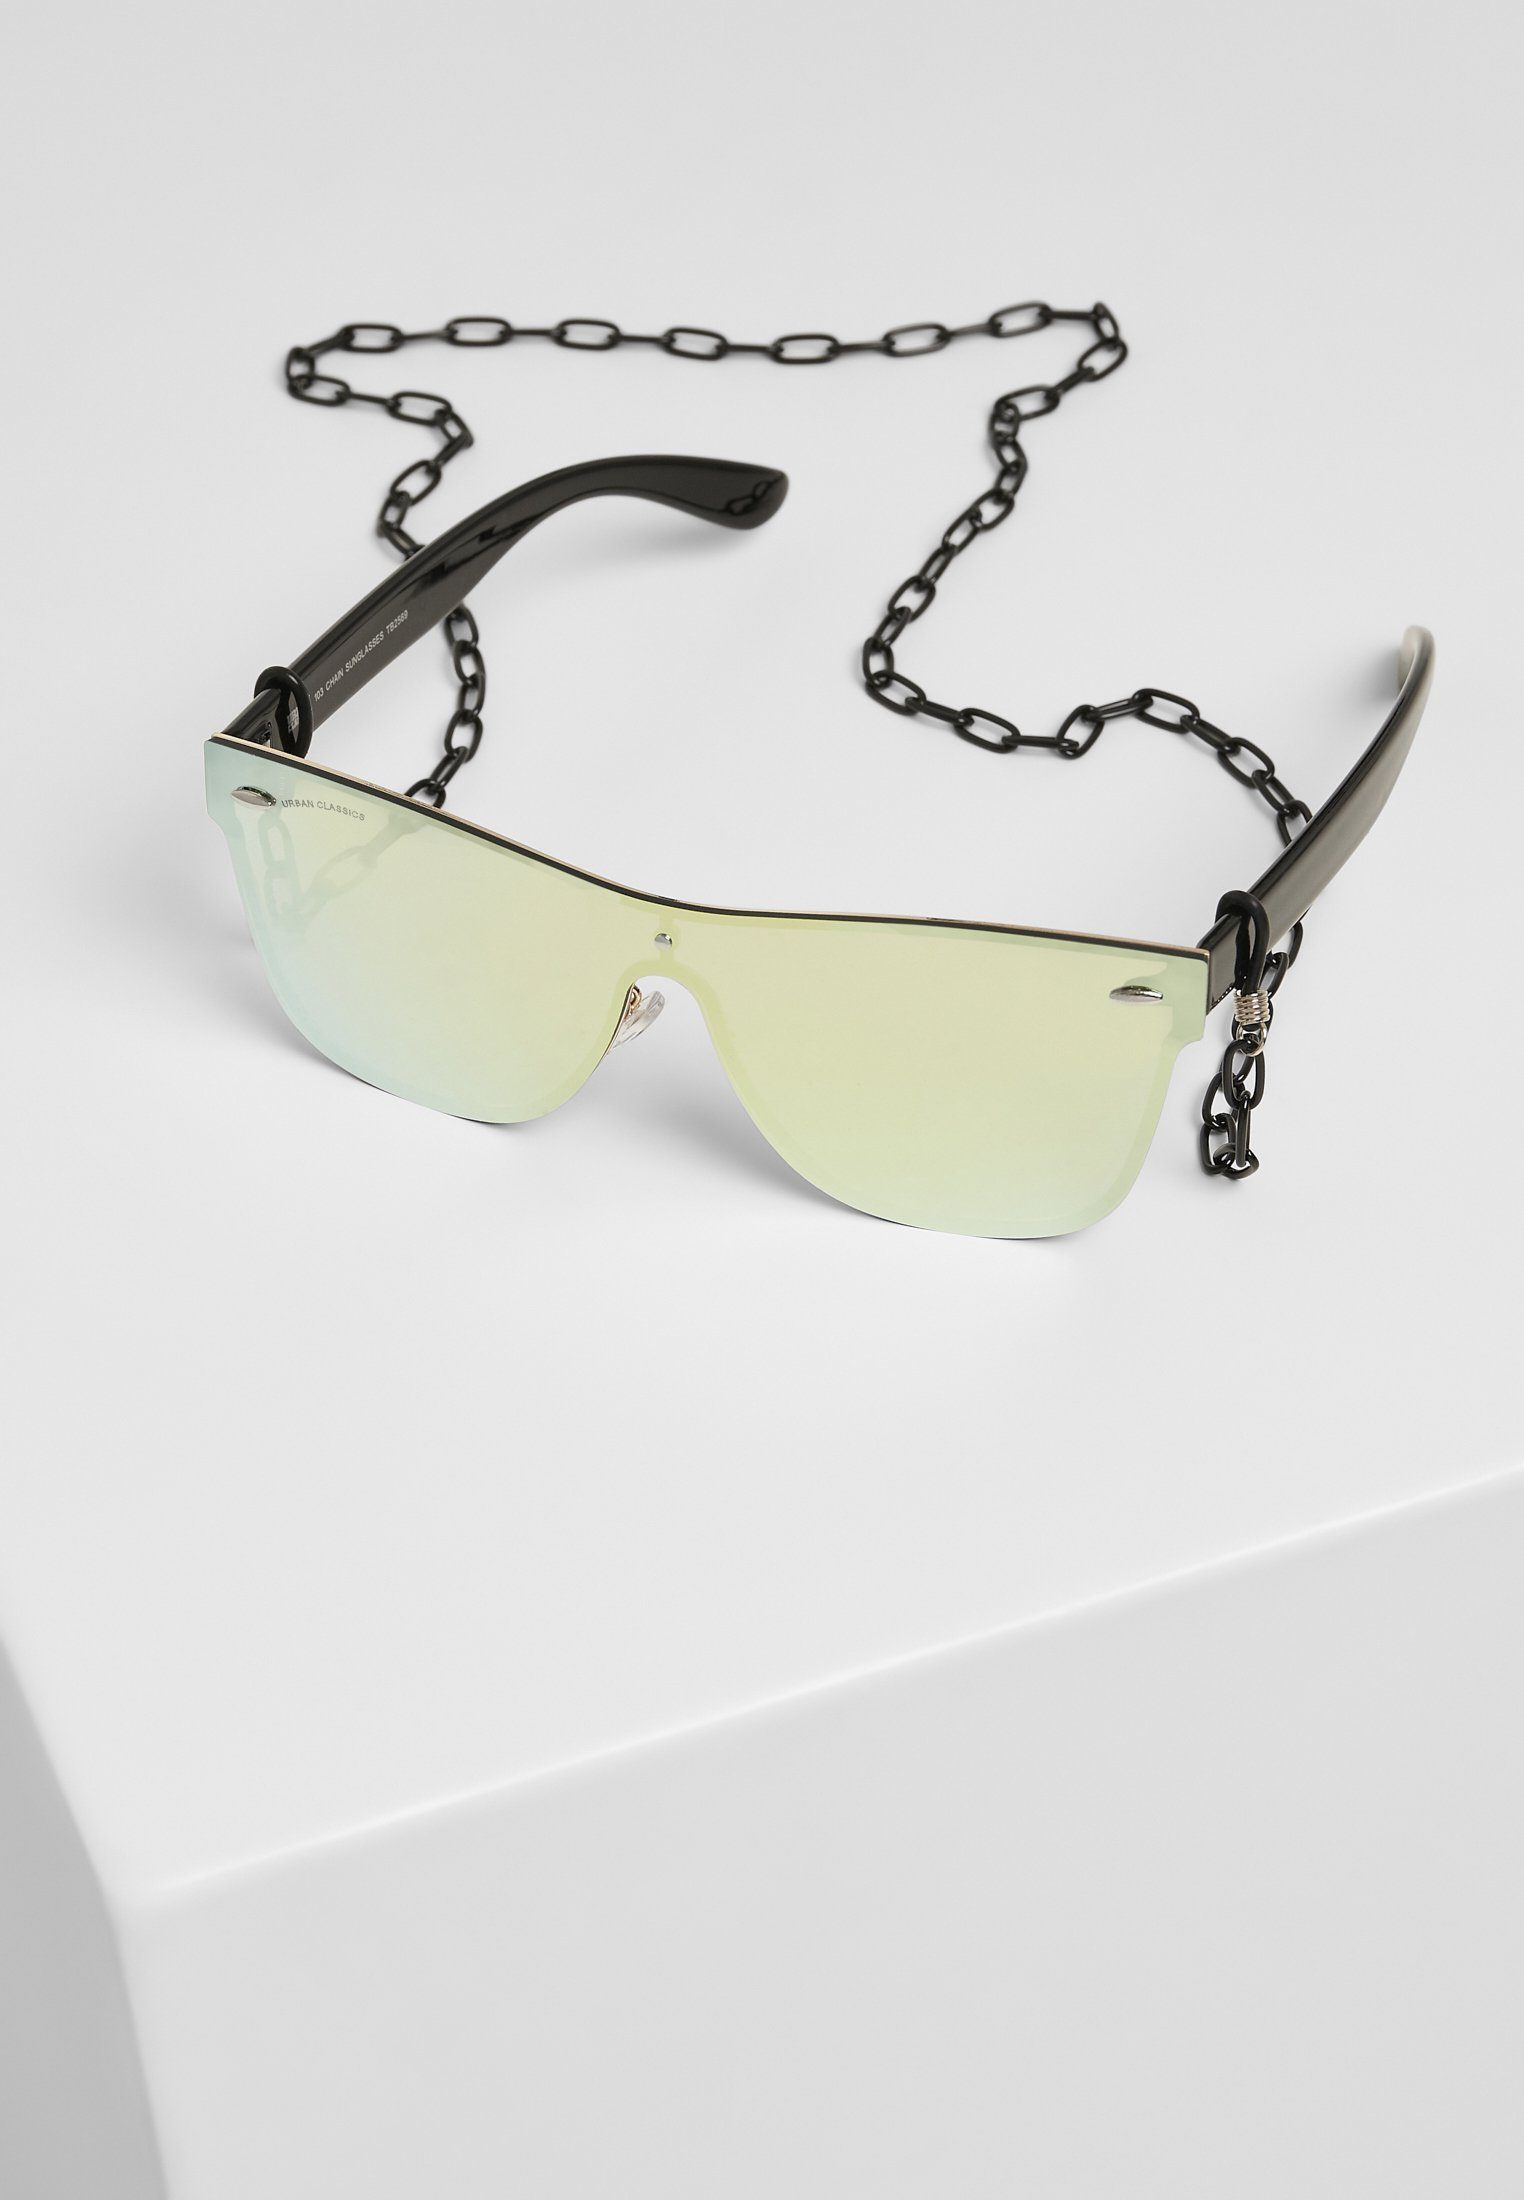 Sonnenbrille URBAN Unisex Sunglasses 103 black/gold CLASSICS Chain mirror